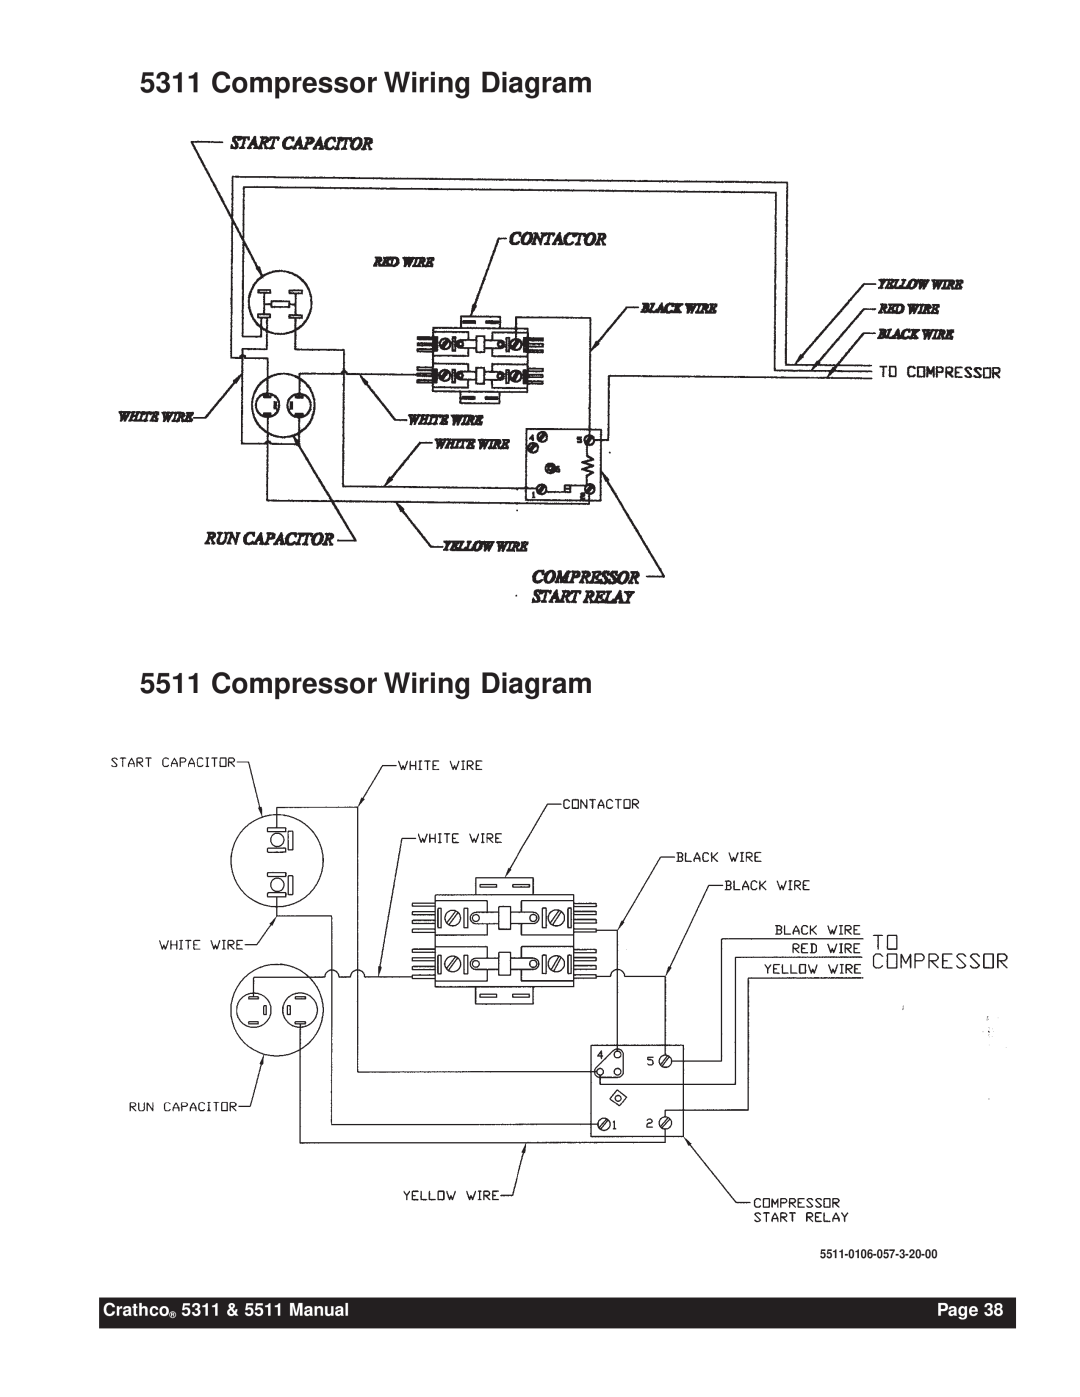 Grindmaster instruction manual Compressor Wiring Diagram, Crathco 5311 & 5511 Manual, Page, 5511-0106-057-3-20-00 